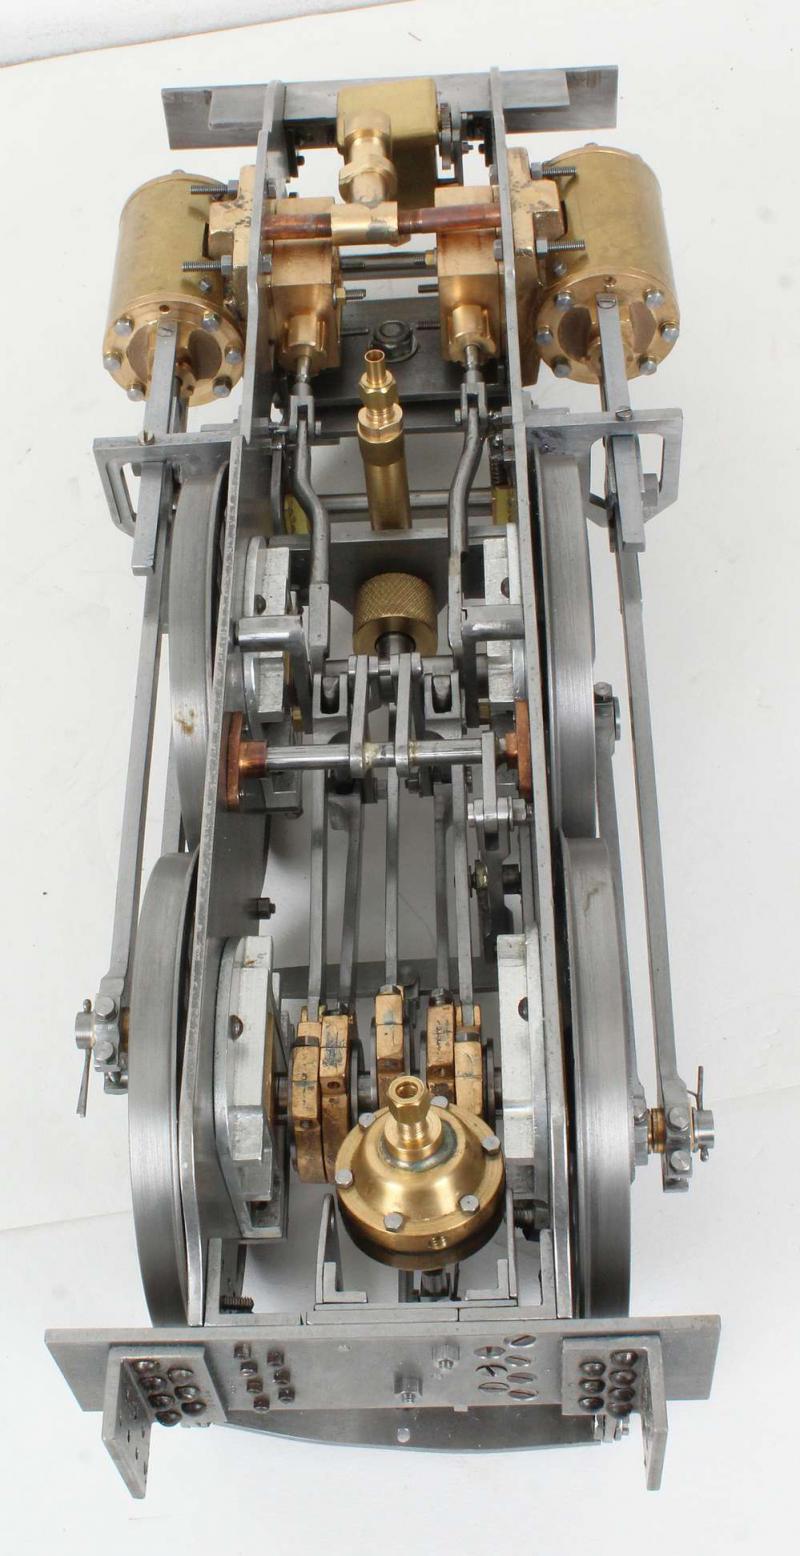 3 1/2 inch gauge GNR Atlantic chassis